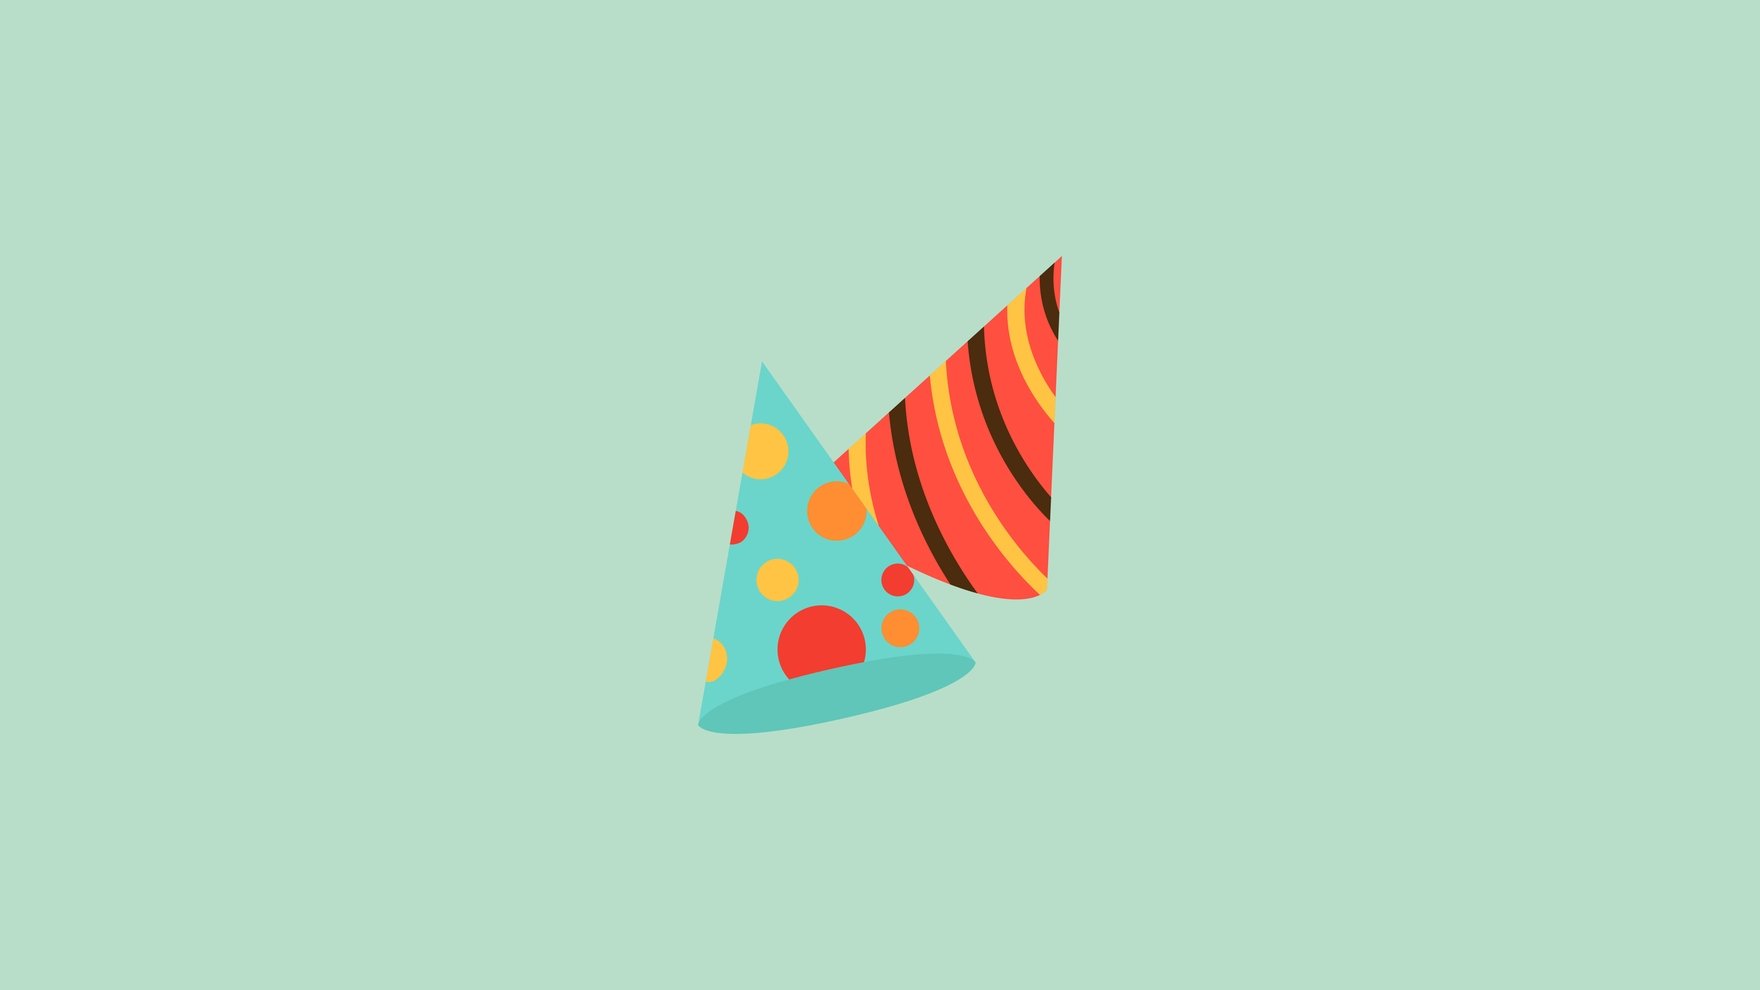 Birthday Hat Background in Illustrator, EPS, SVG, JPG, PNG